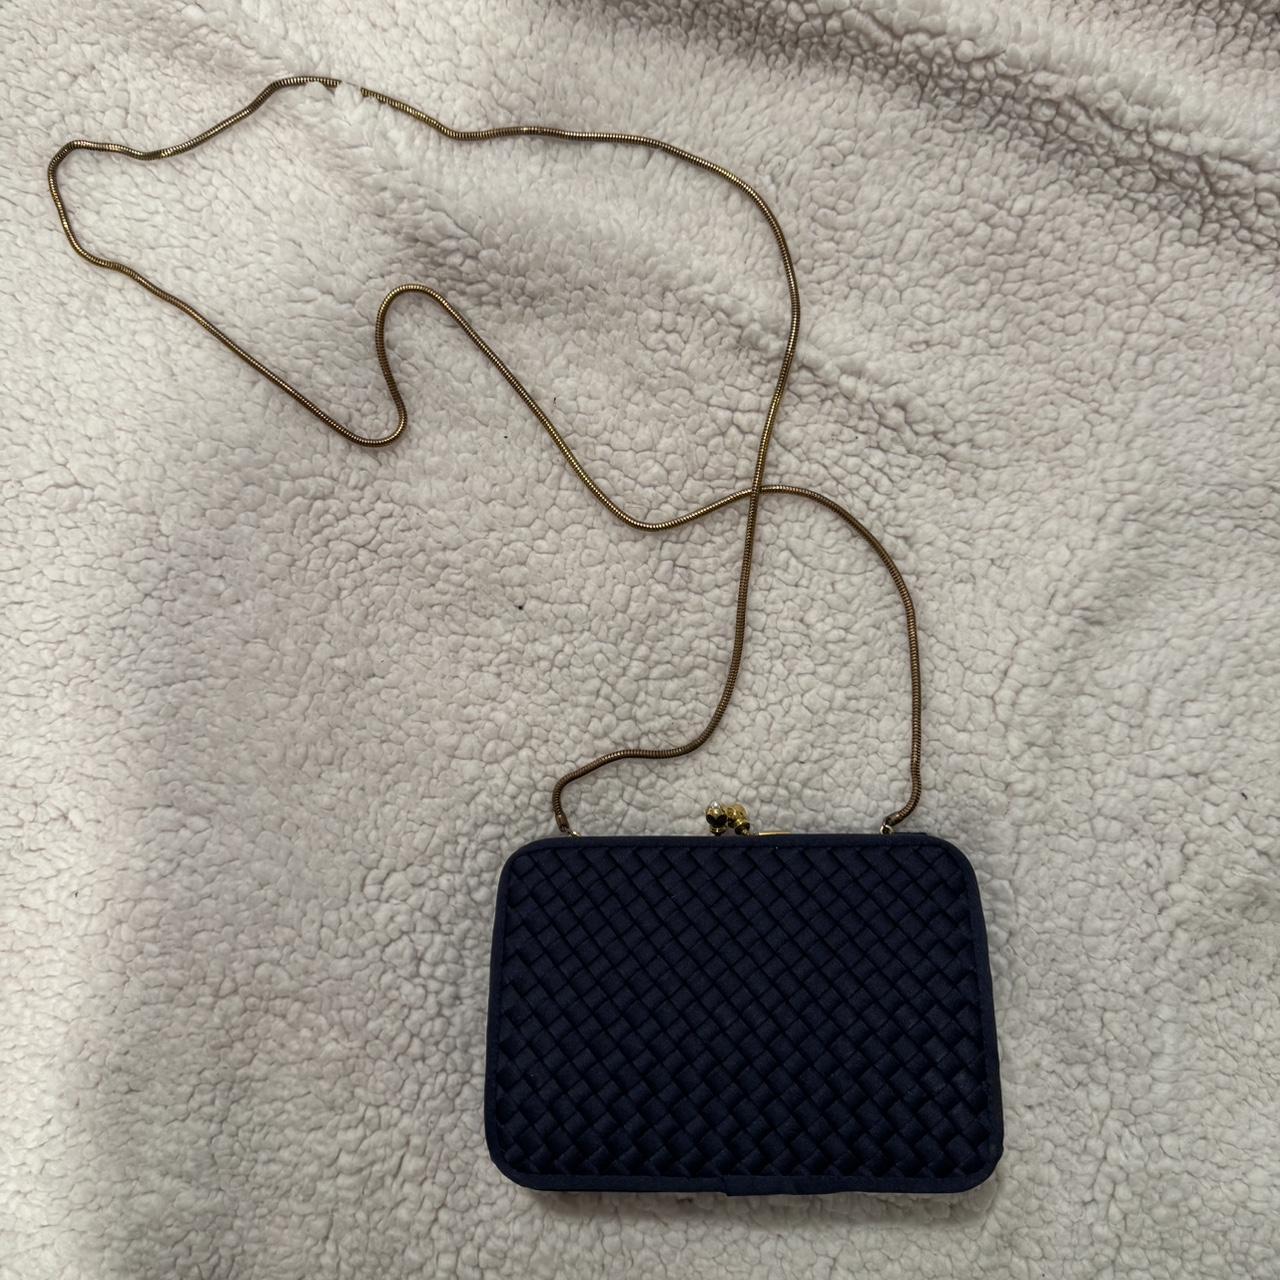 Élan Navy Blue Clutch Gold Hardware Purse Weaved Small | eBay